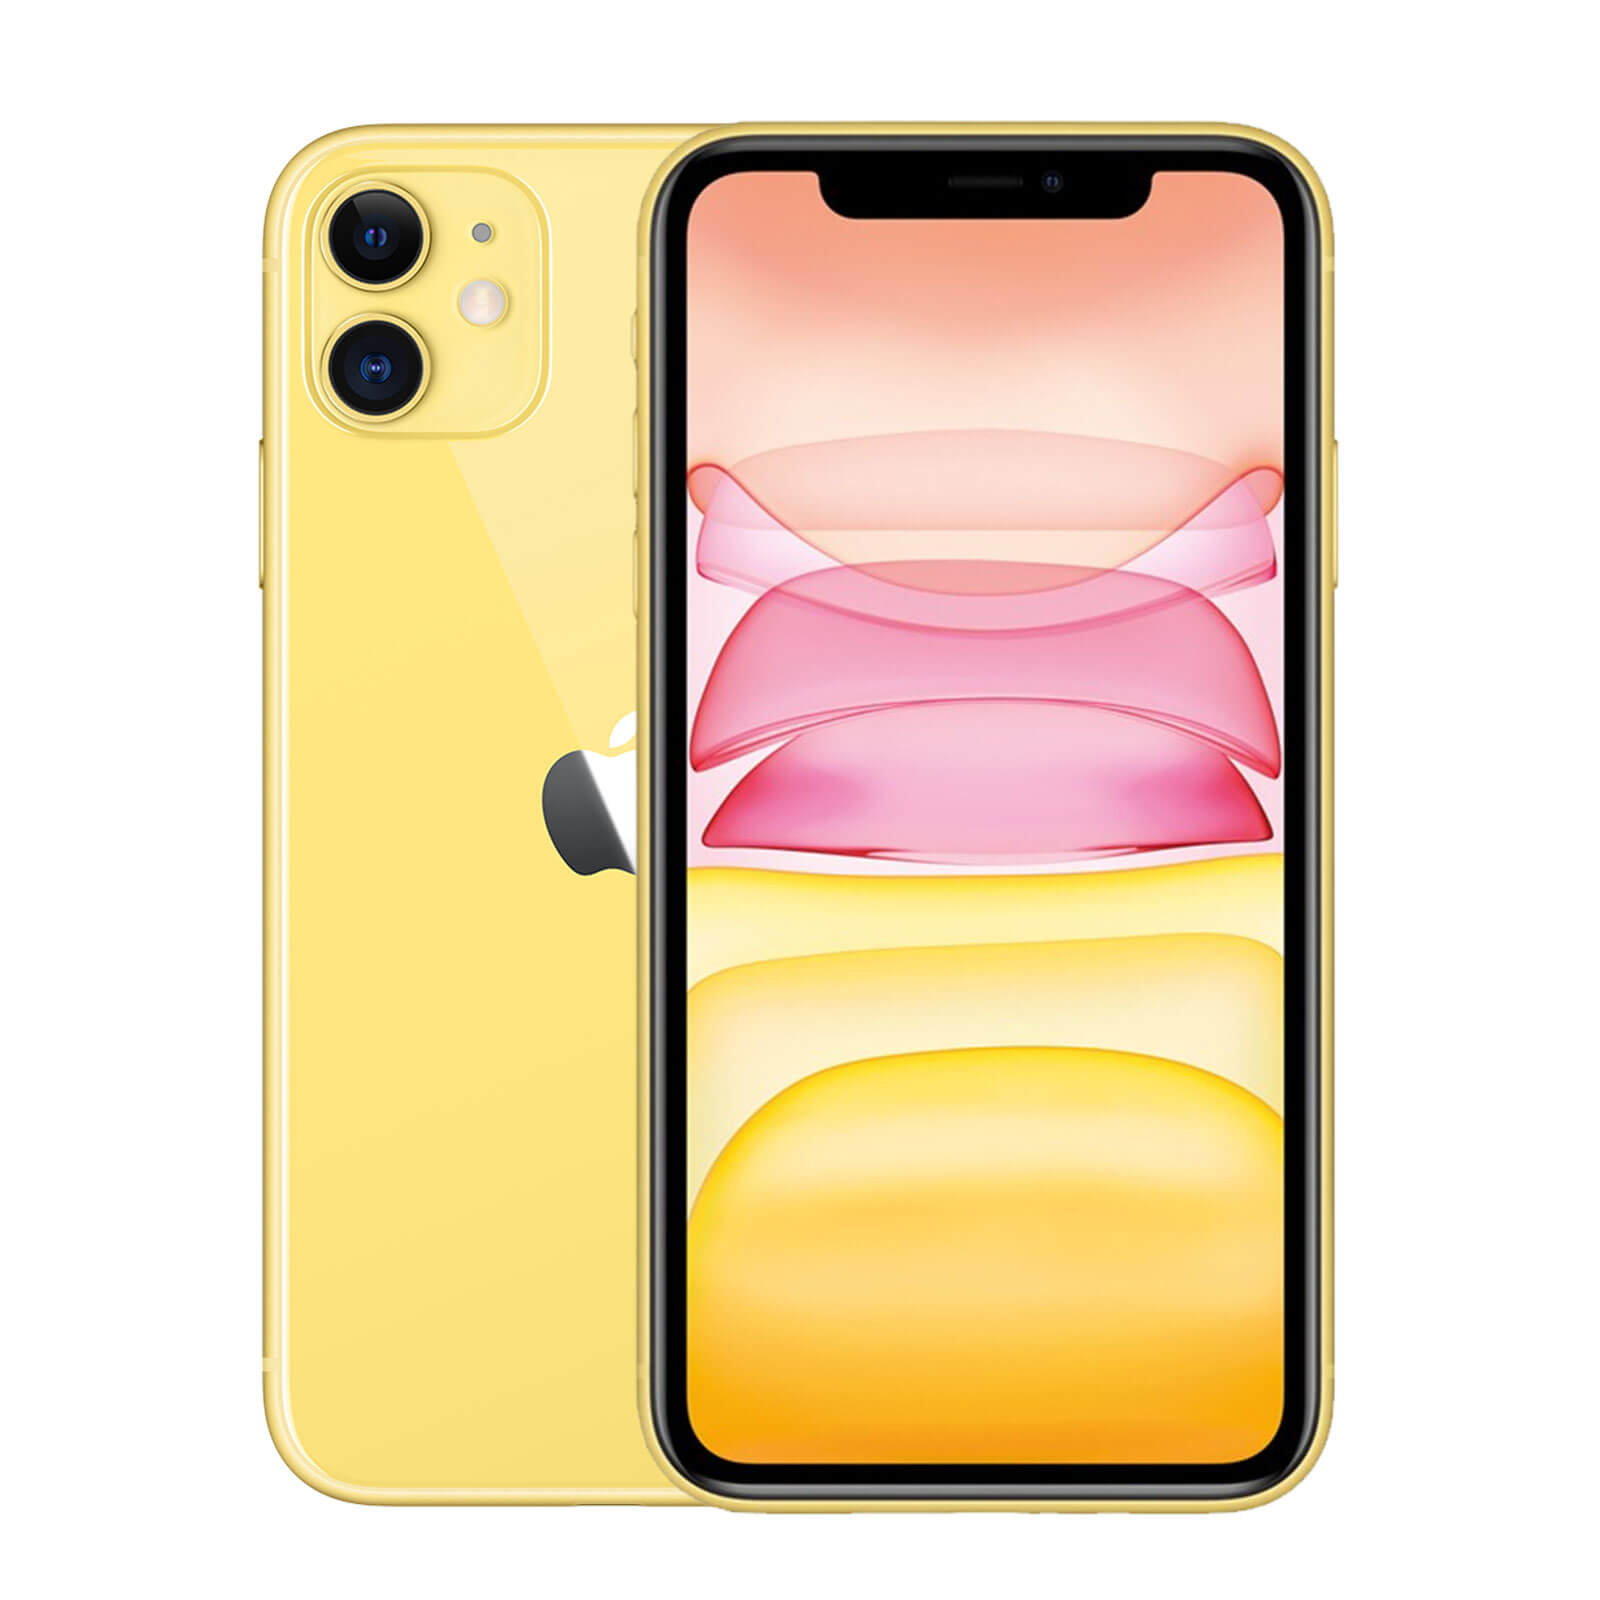 Apple iPhone 11 256GB Yellow Good - Unlocked